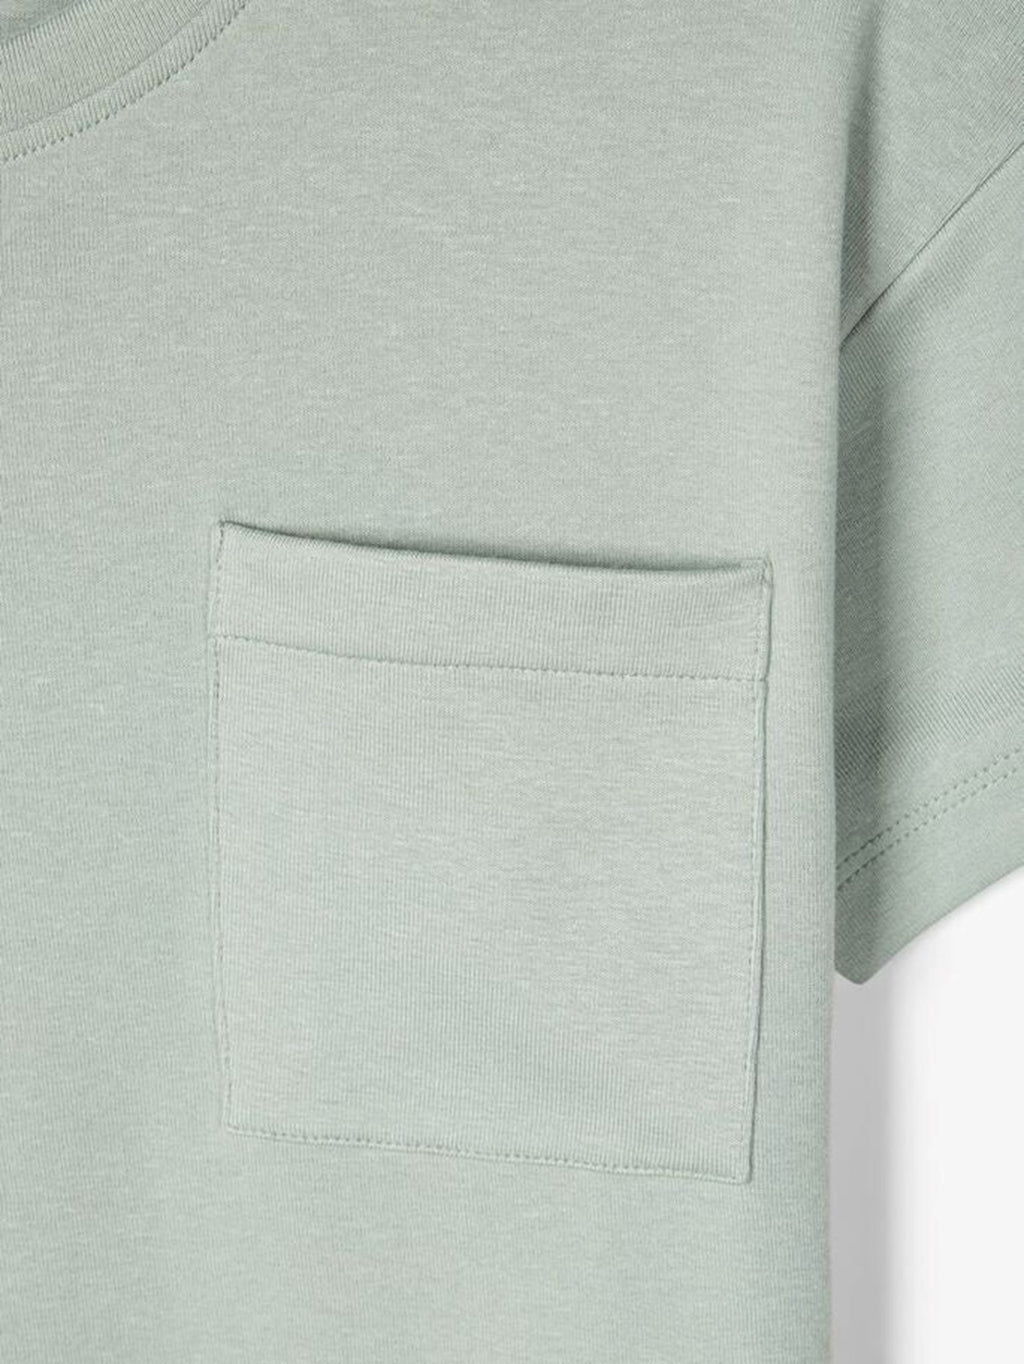 Loose fit t-shirt - Light green